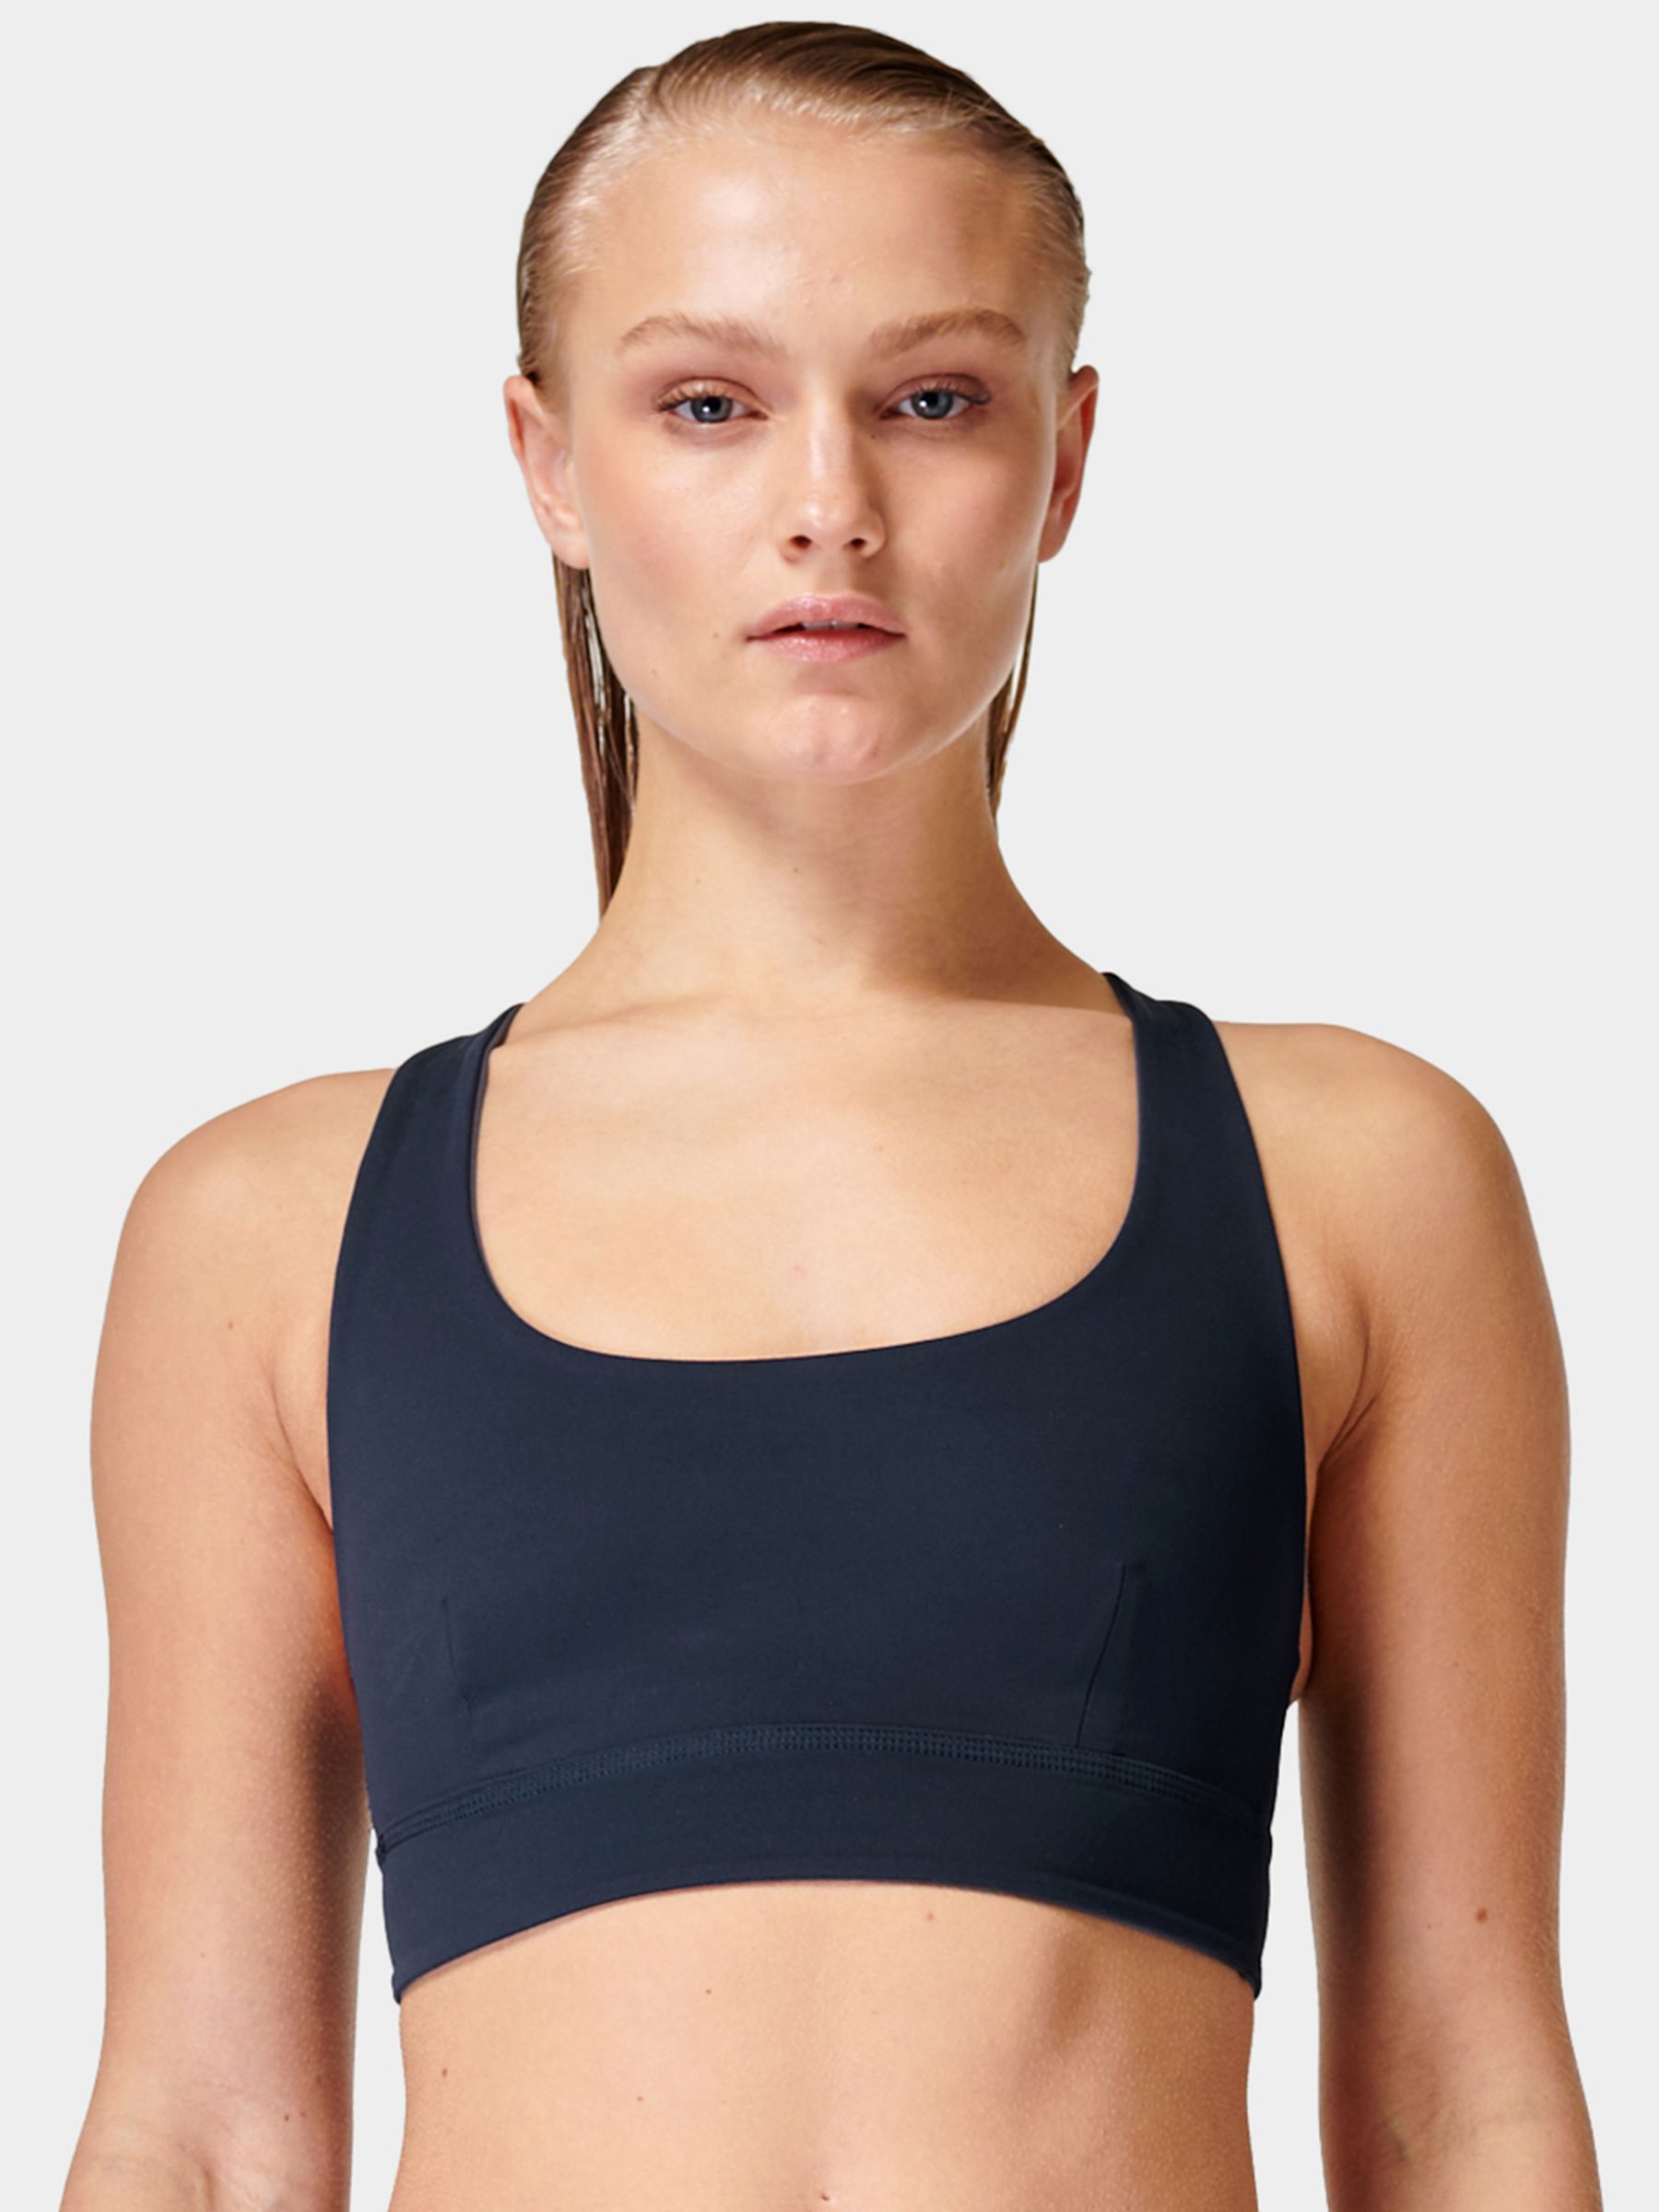 Sweaty Betty Super Soft Reversible Yoga Sports Bra, Urban Grey/Navy, XXS